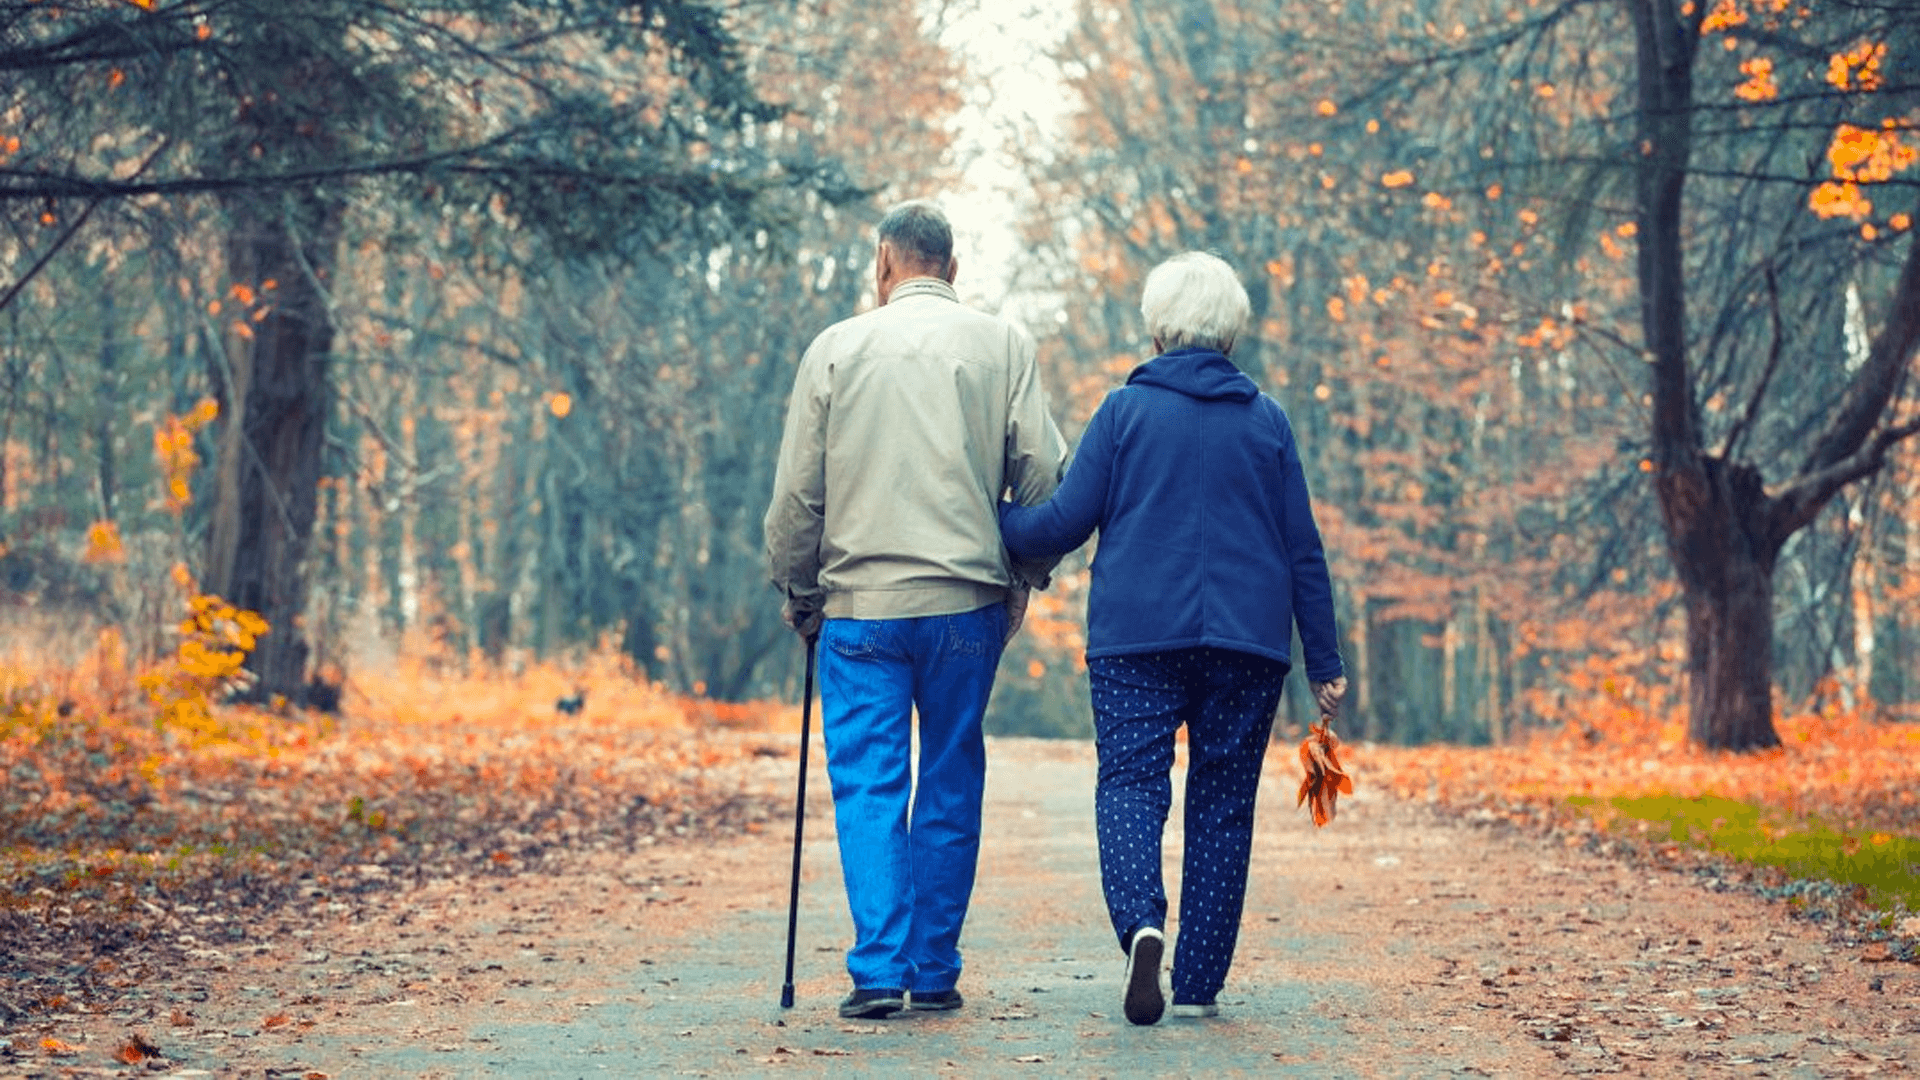 Tips for Red Deer Seniors That Like to Walk